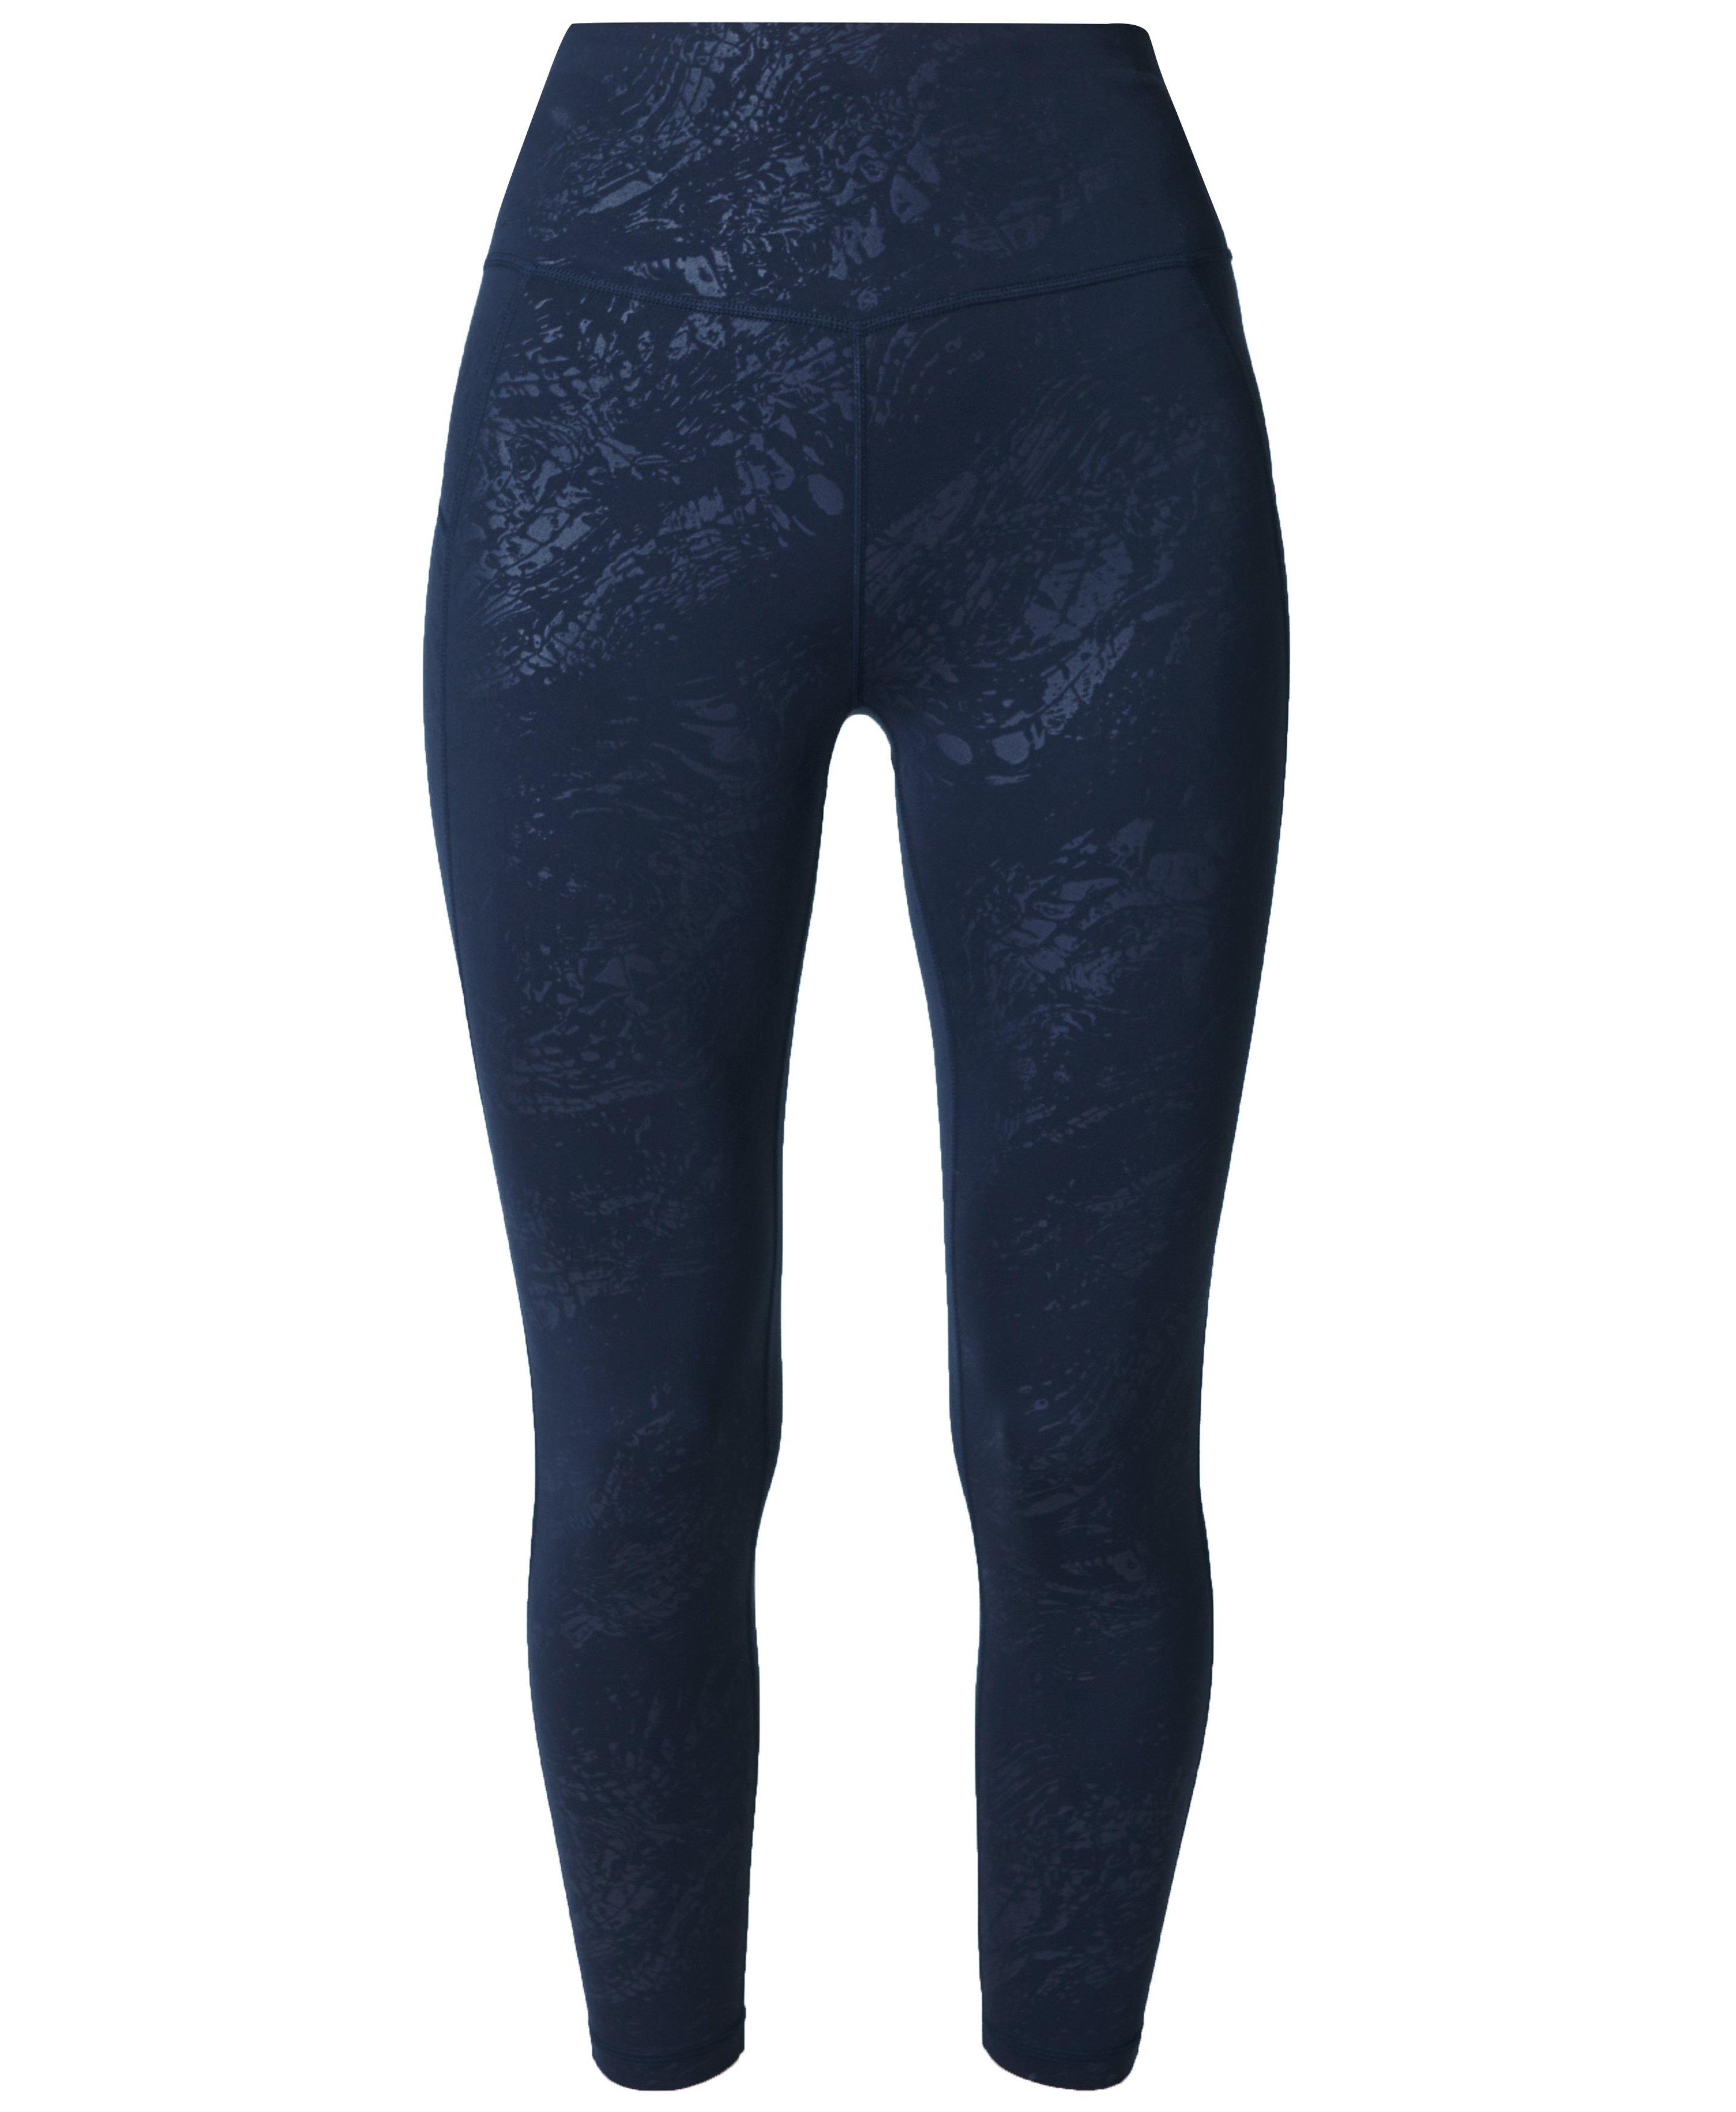 EVERLAST Woman's Black/ Light blue Stretch cotton leggings with Everlast  print